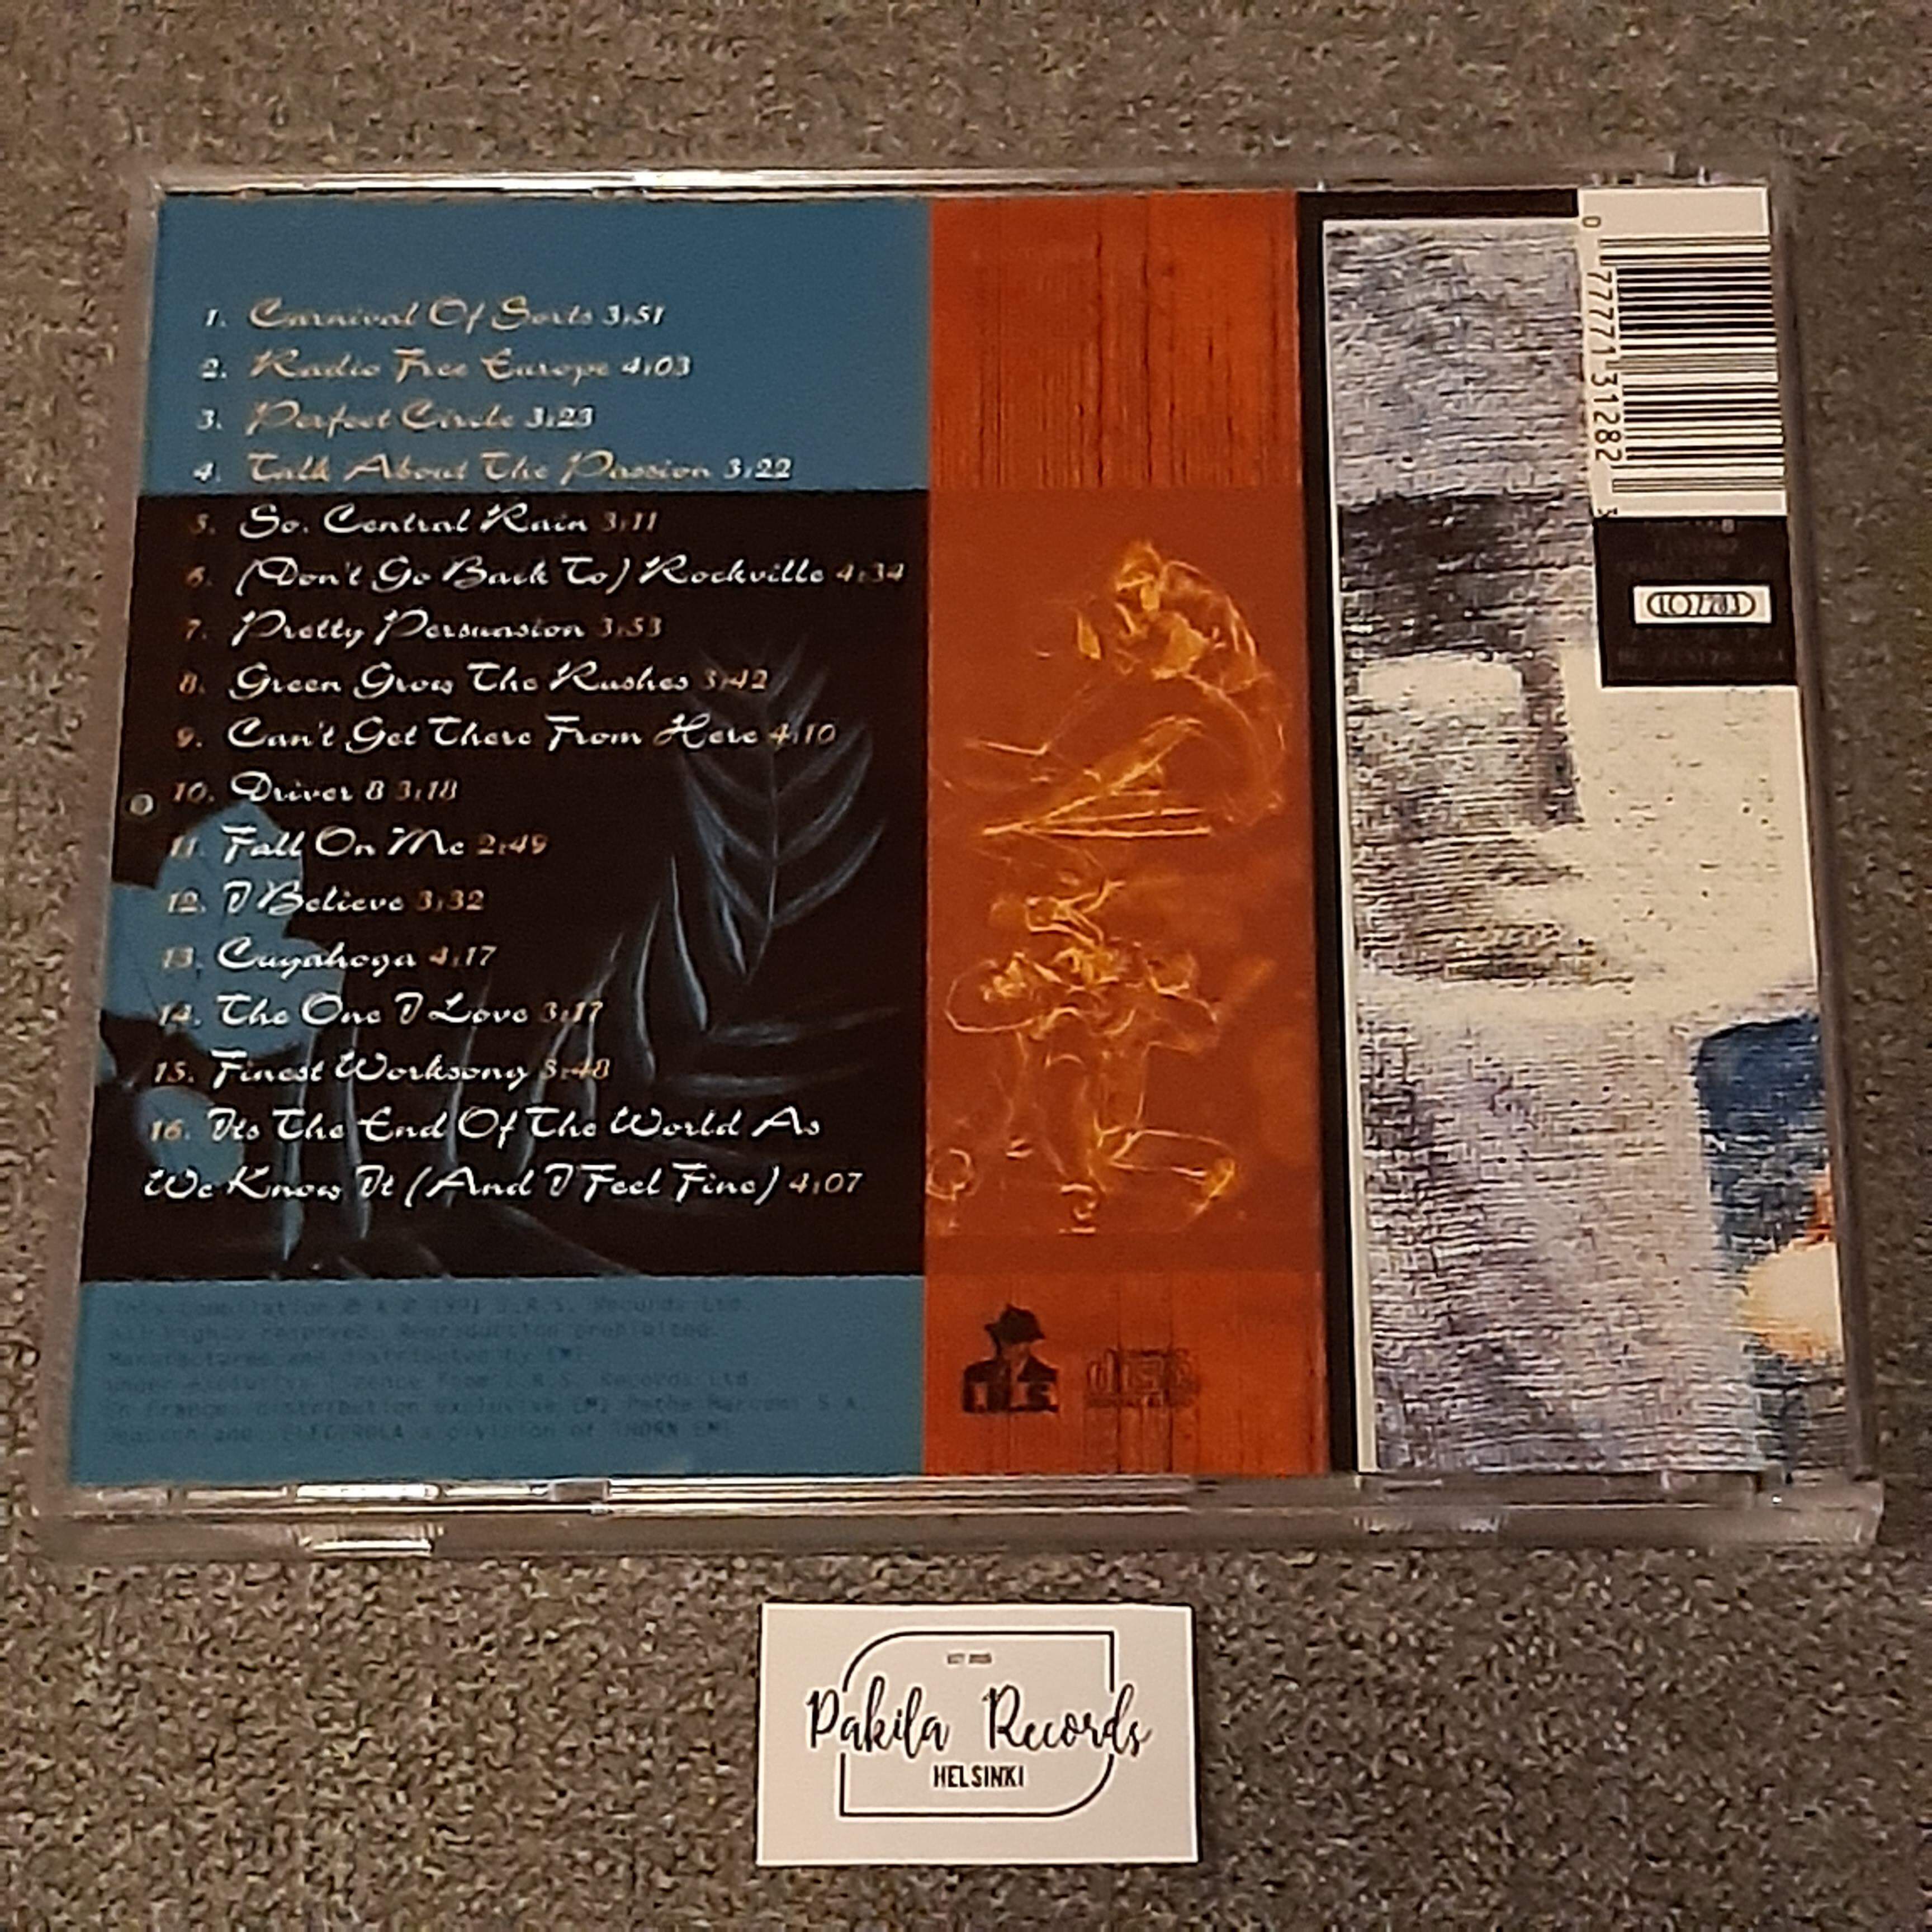 R.E.M. - The Best Of - CD (käytetty)